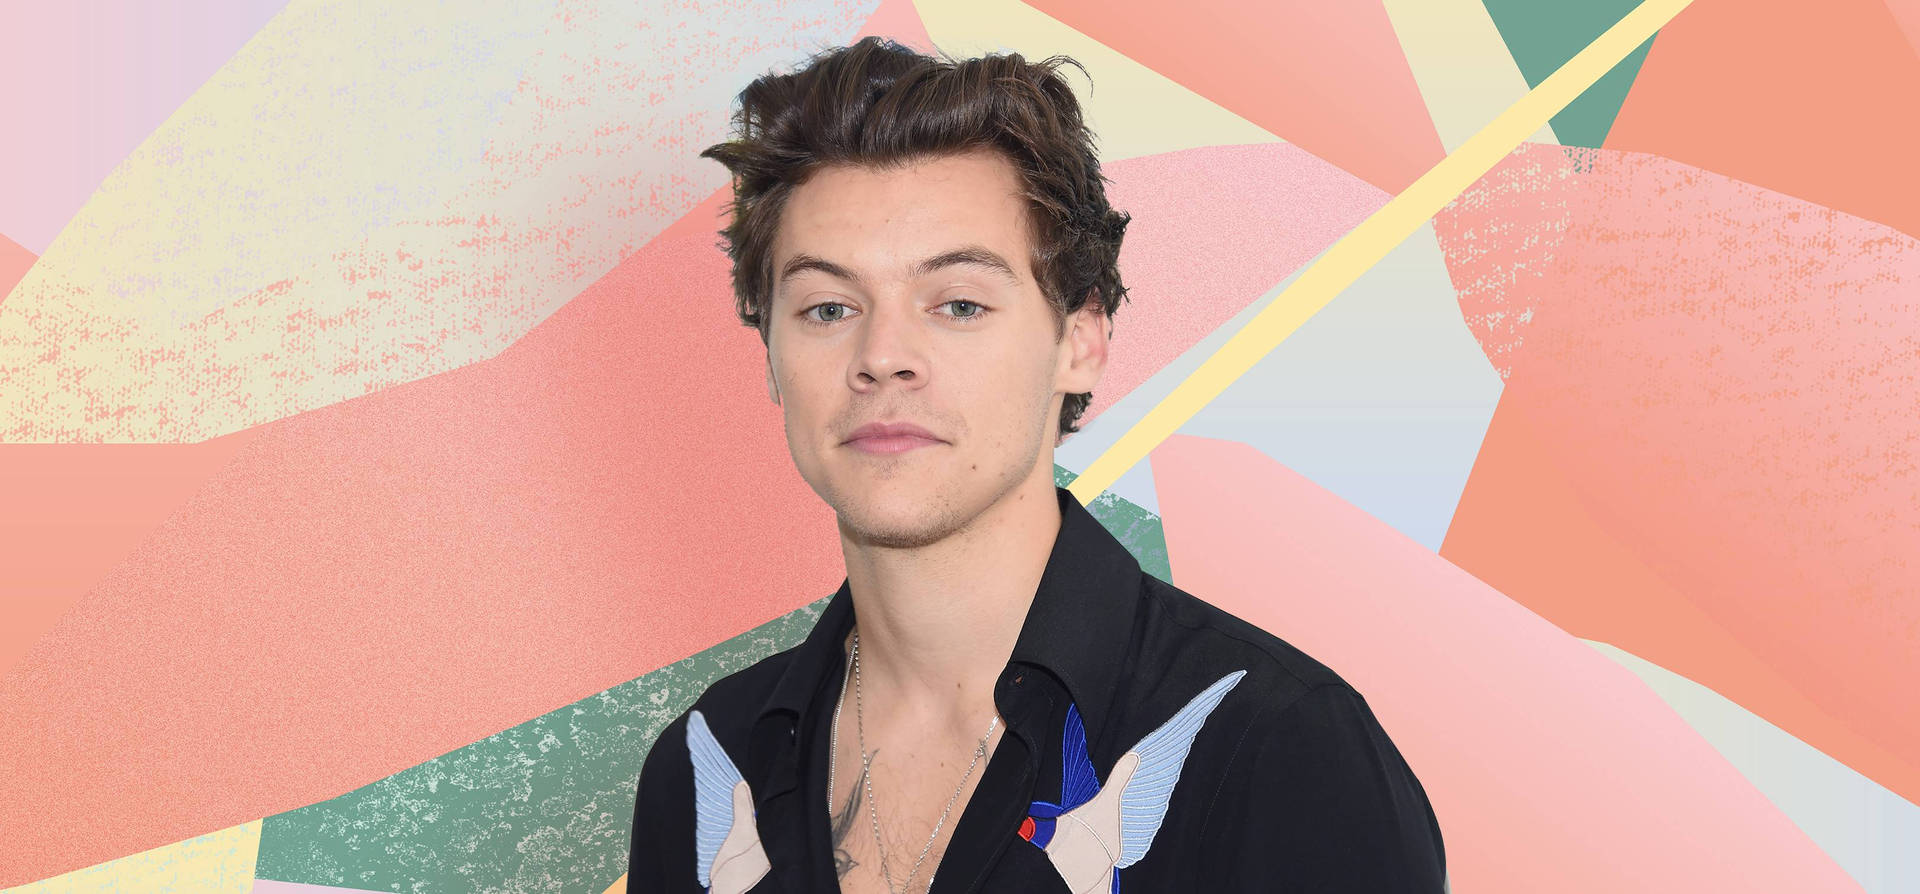 Harry Styles Pastel Background Wallpaper